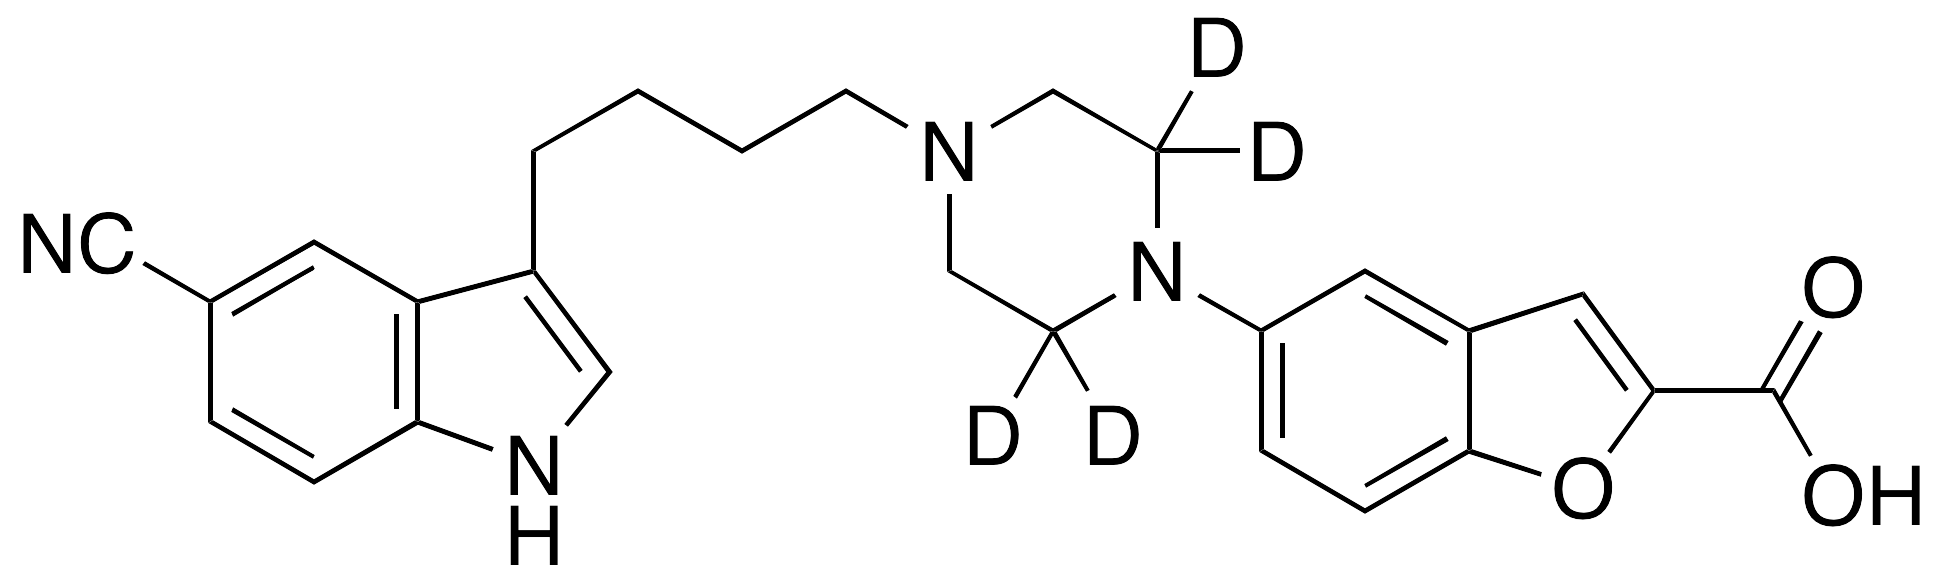 Vilazodone Carboxylic Acid-d4